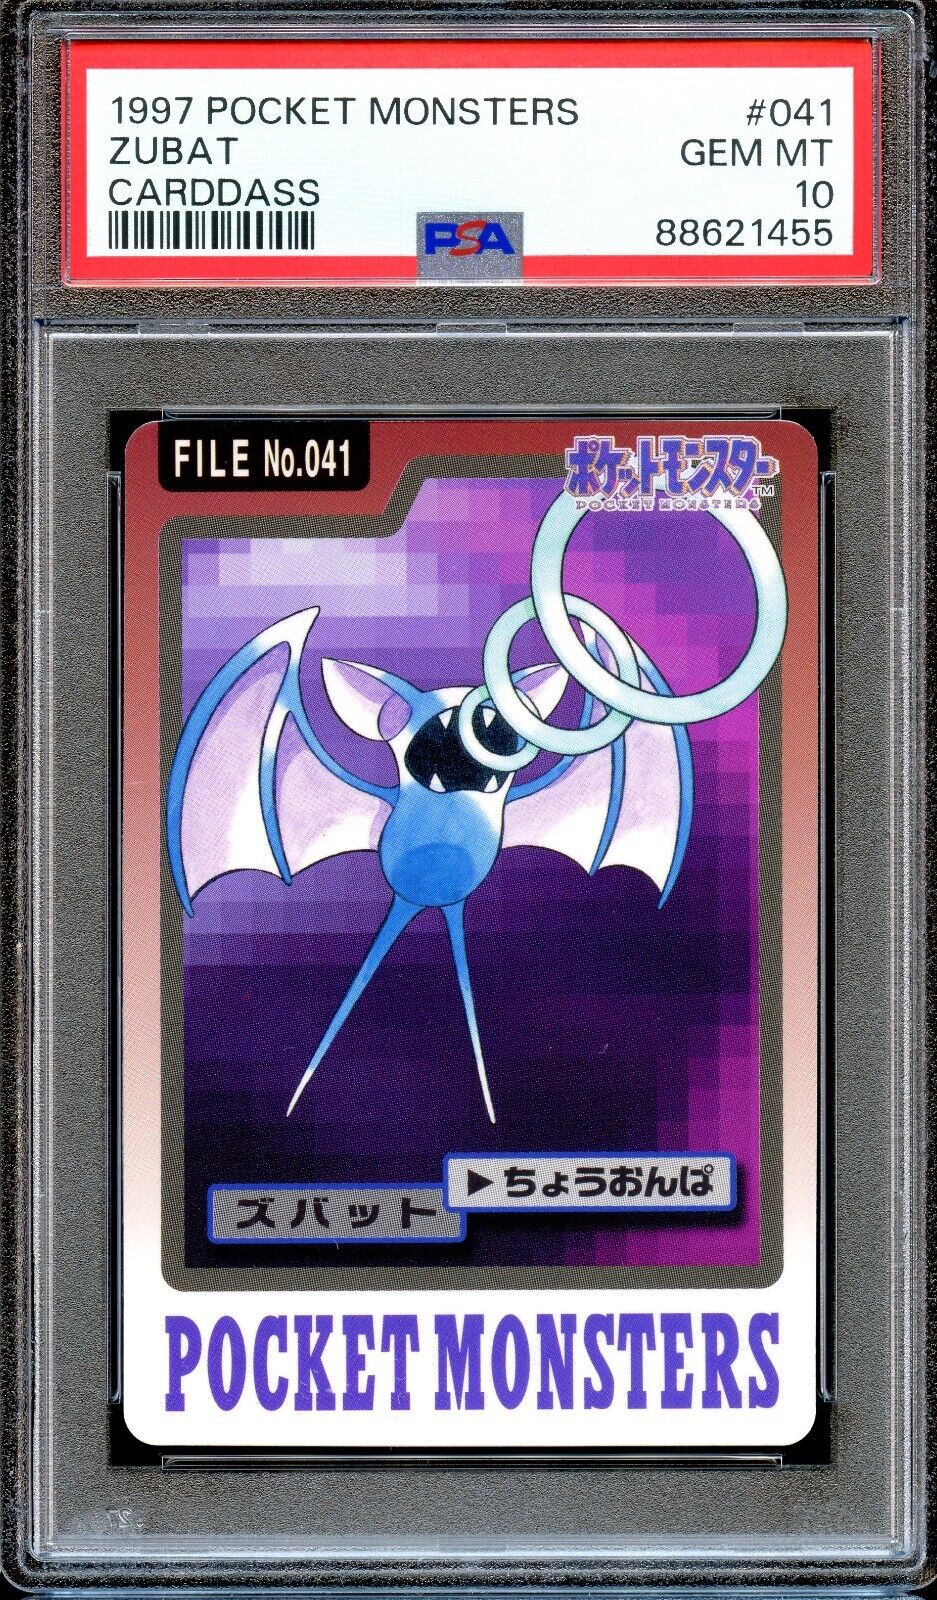 PSA 10 Zubat #041 Bandai Carddass 1997 Japanese Pokemon Card GEM MINT